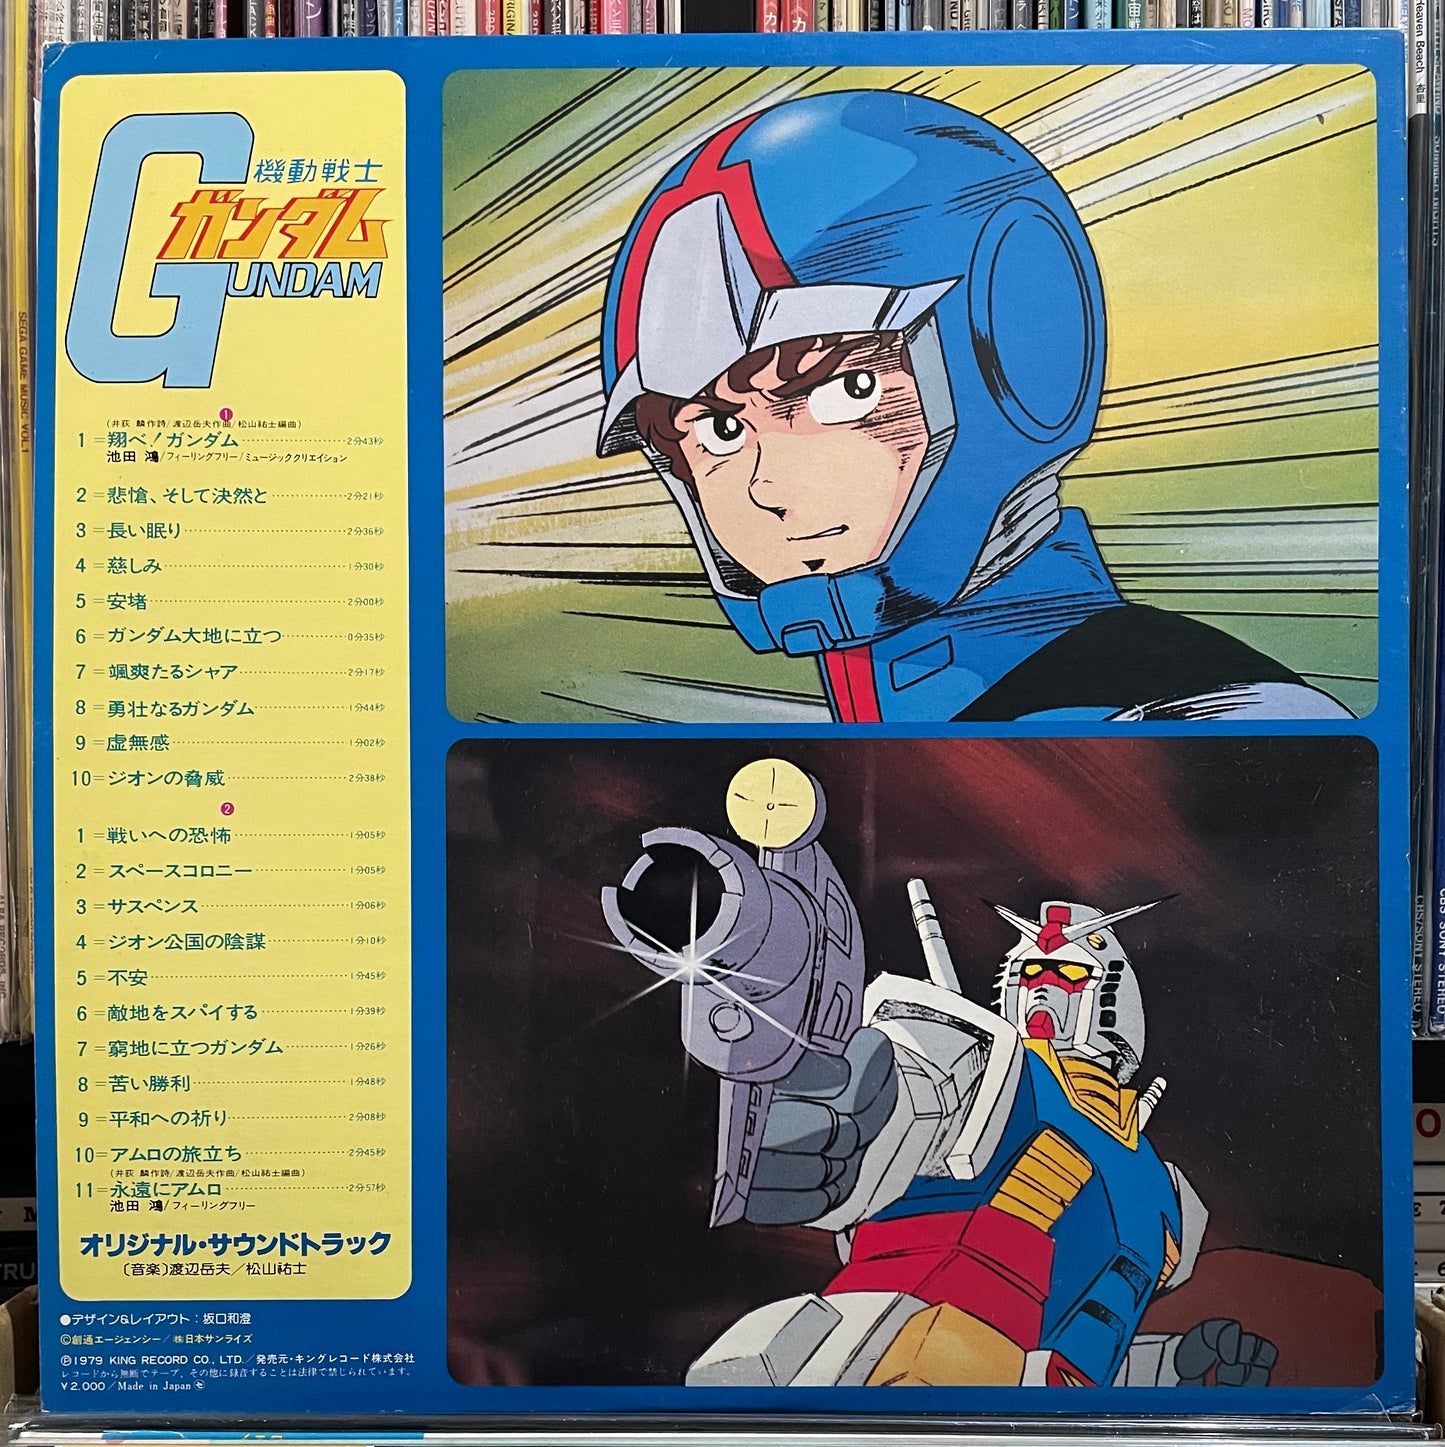 Gundam anime BGM (1979)